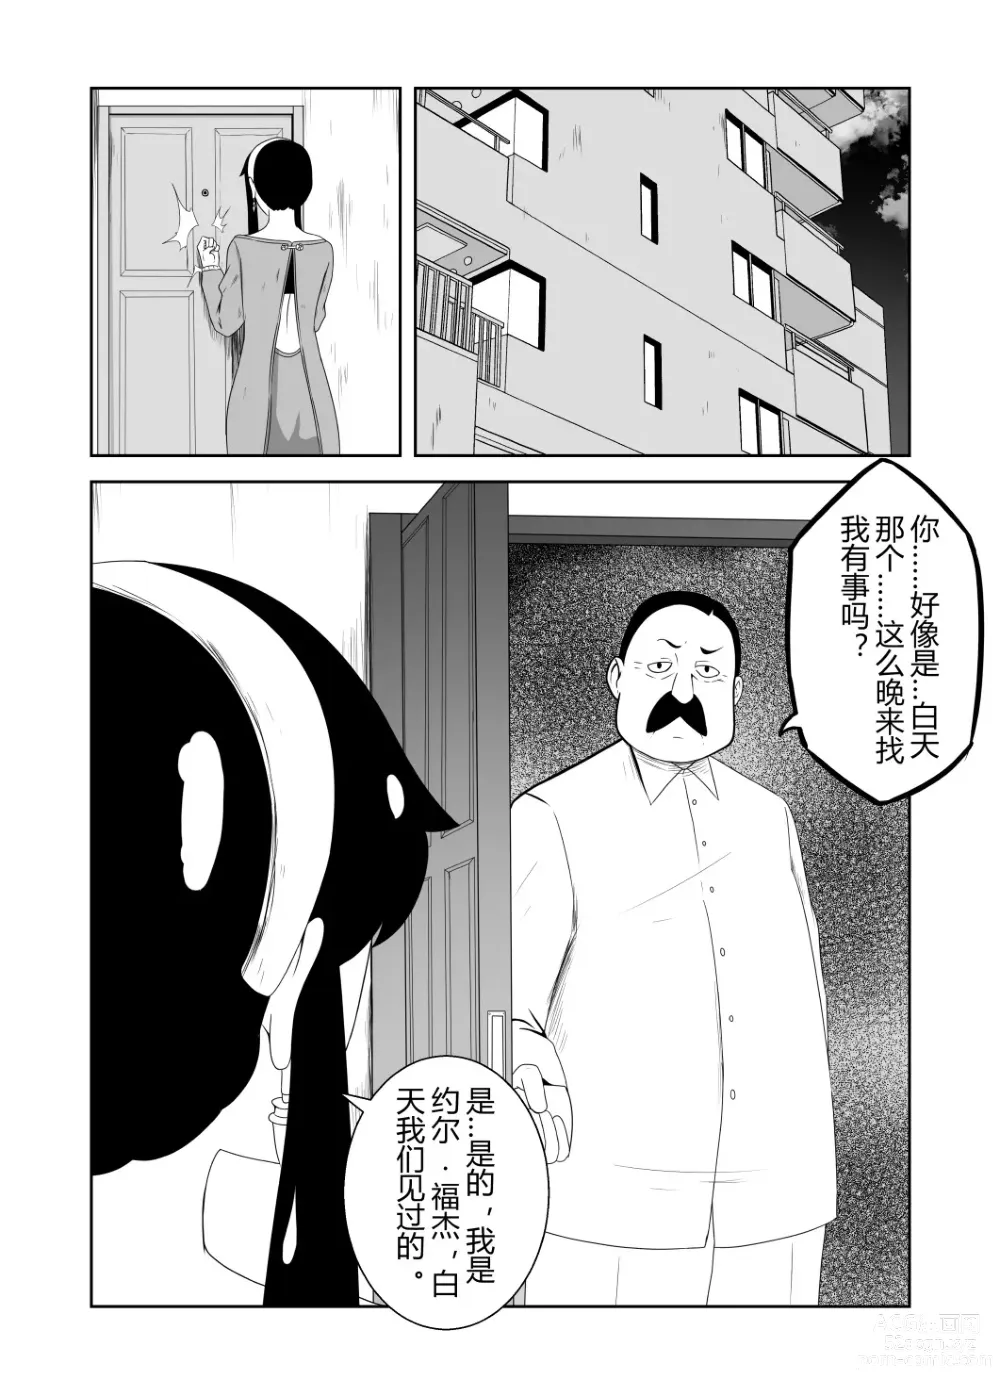 Page 4 of doujinshi 间谍过家家